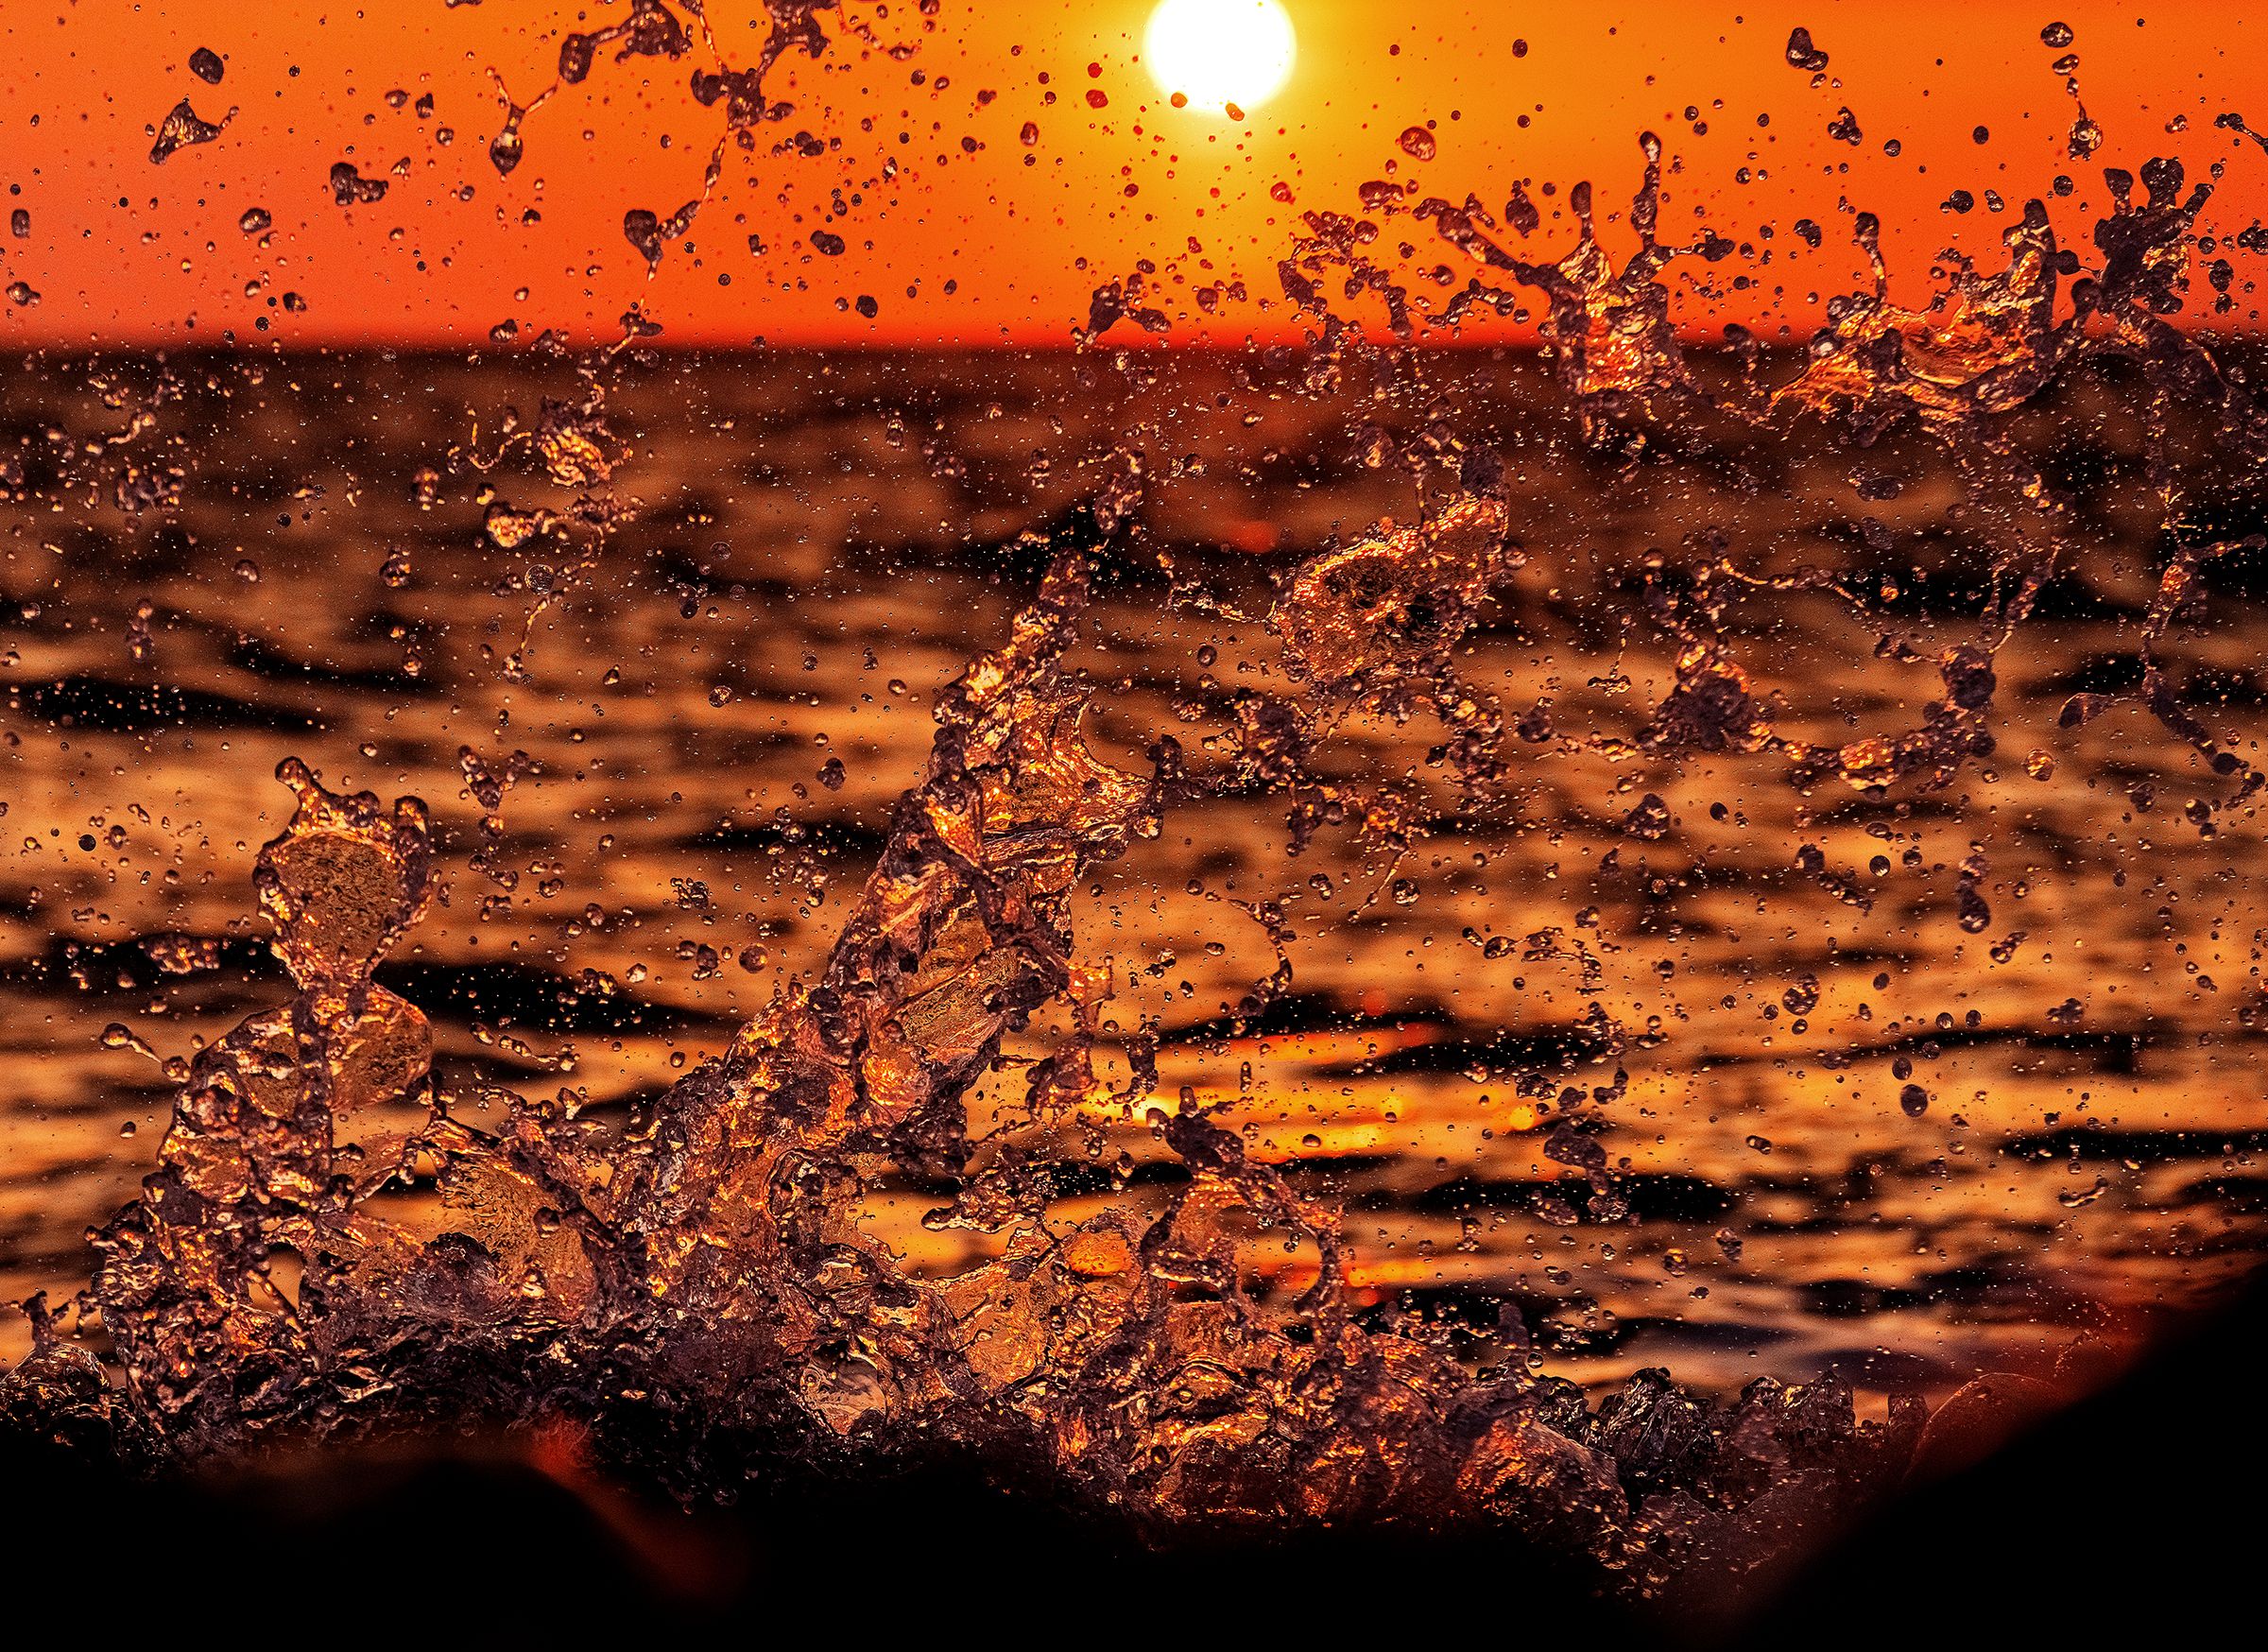 #море #закат #шторм #природа #сочи #краски #волны #капли #брызги, Сергей Найбич